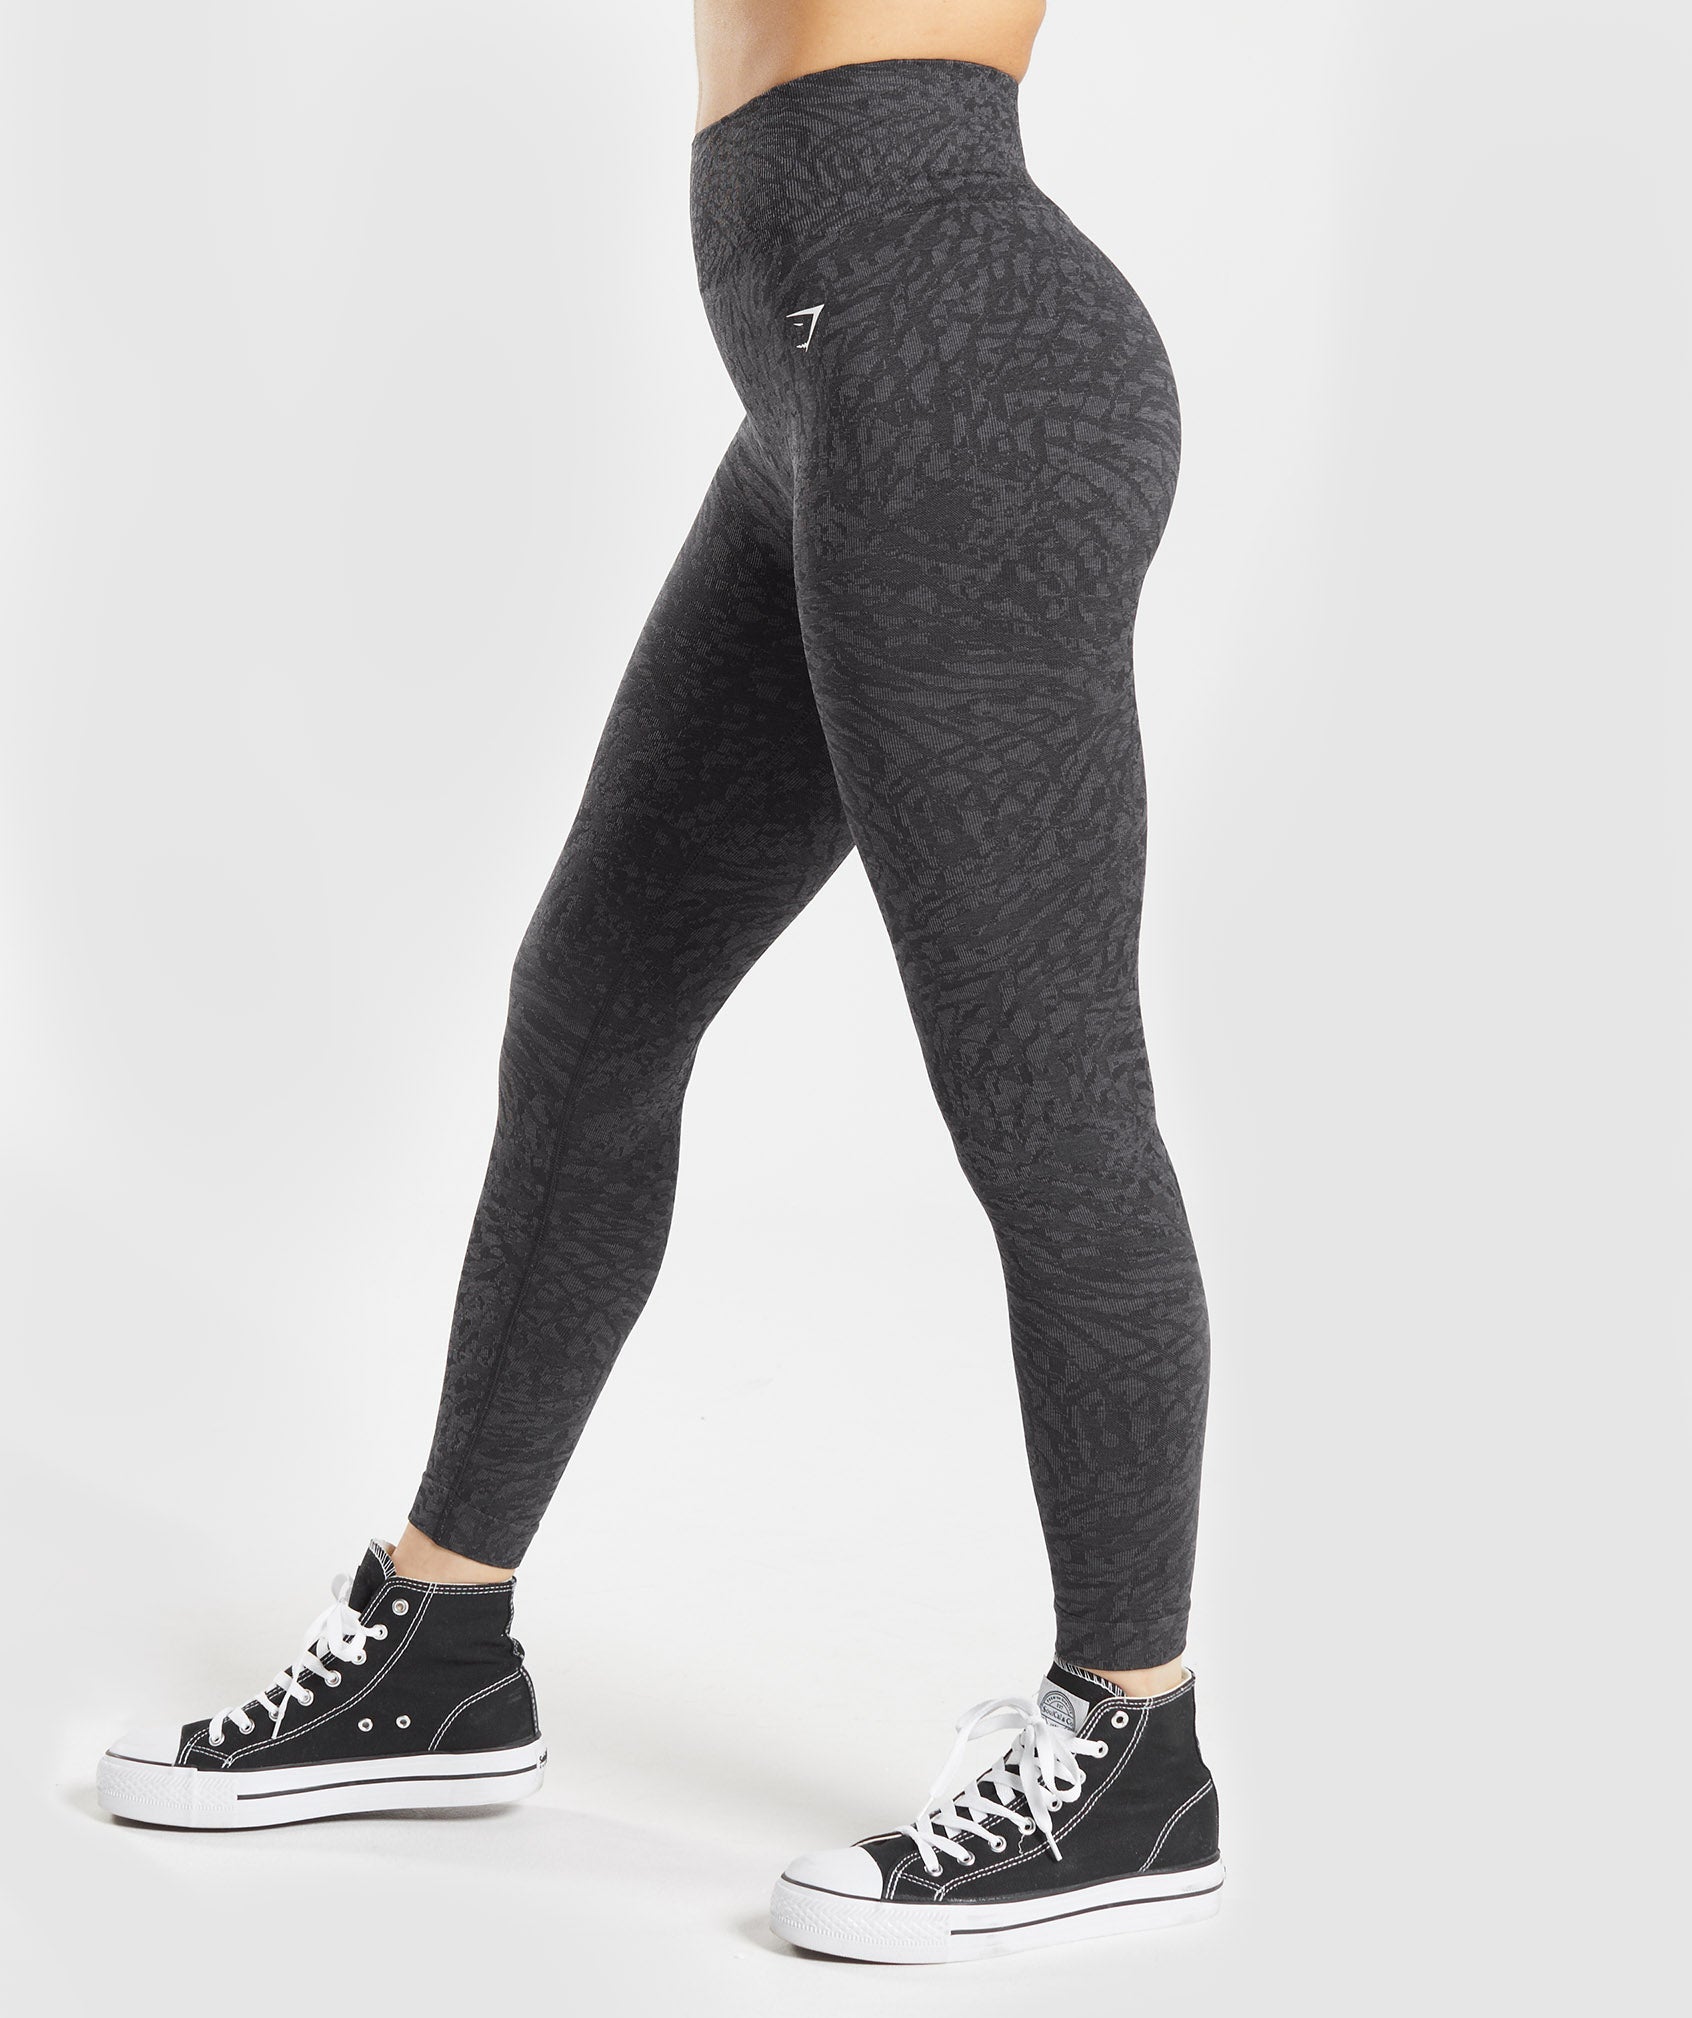 GYMSHARK Core Leggings Charcoal Gray Soft Stretch fit Leg Logo